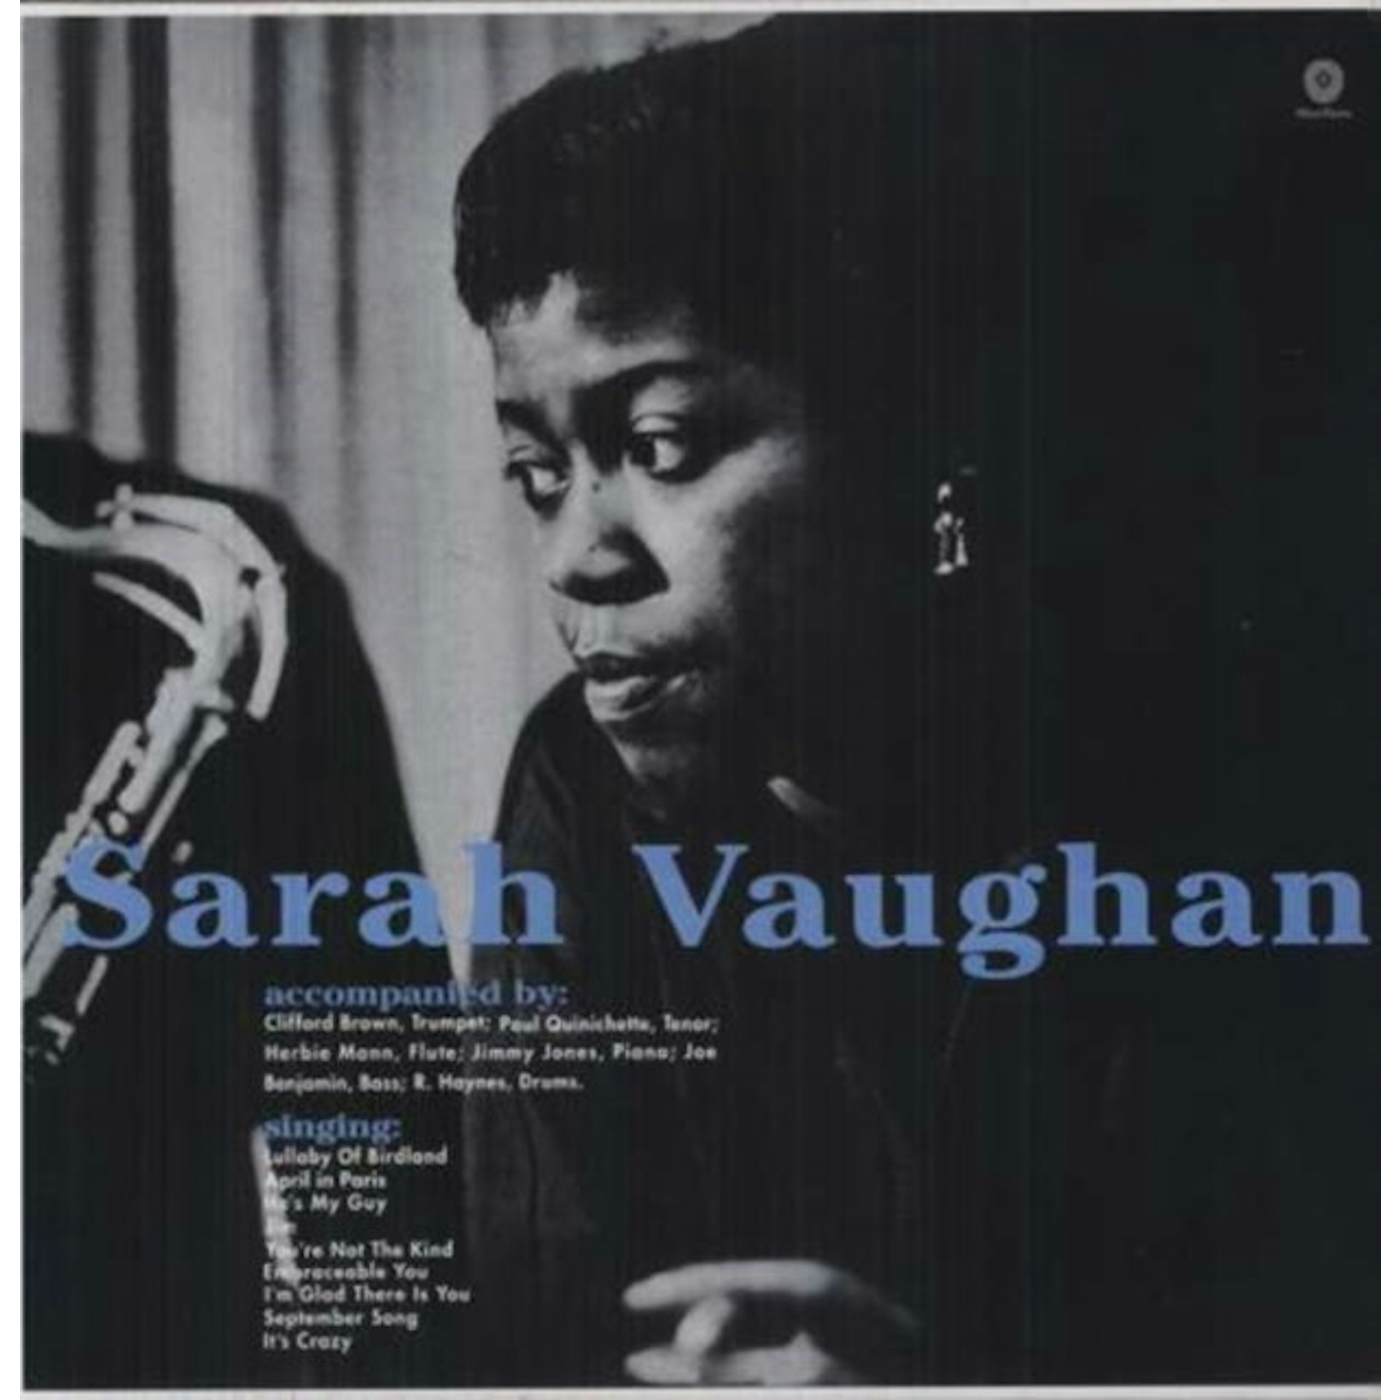 Sarah Vaughan LP Vinyl Record  With Clifford Brown